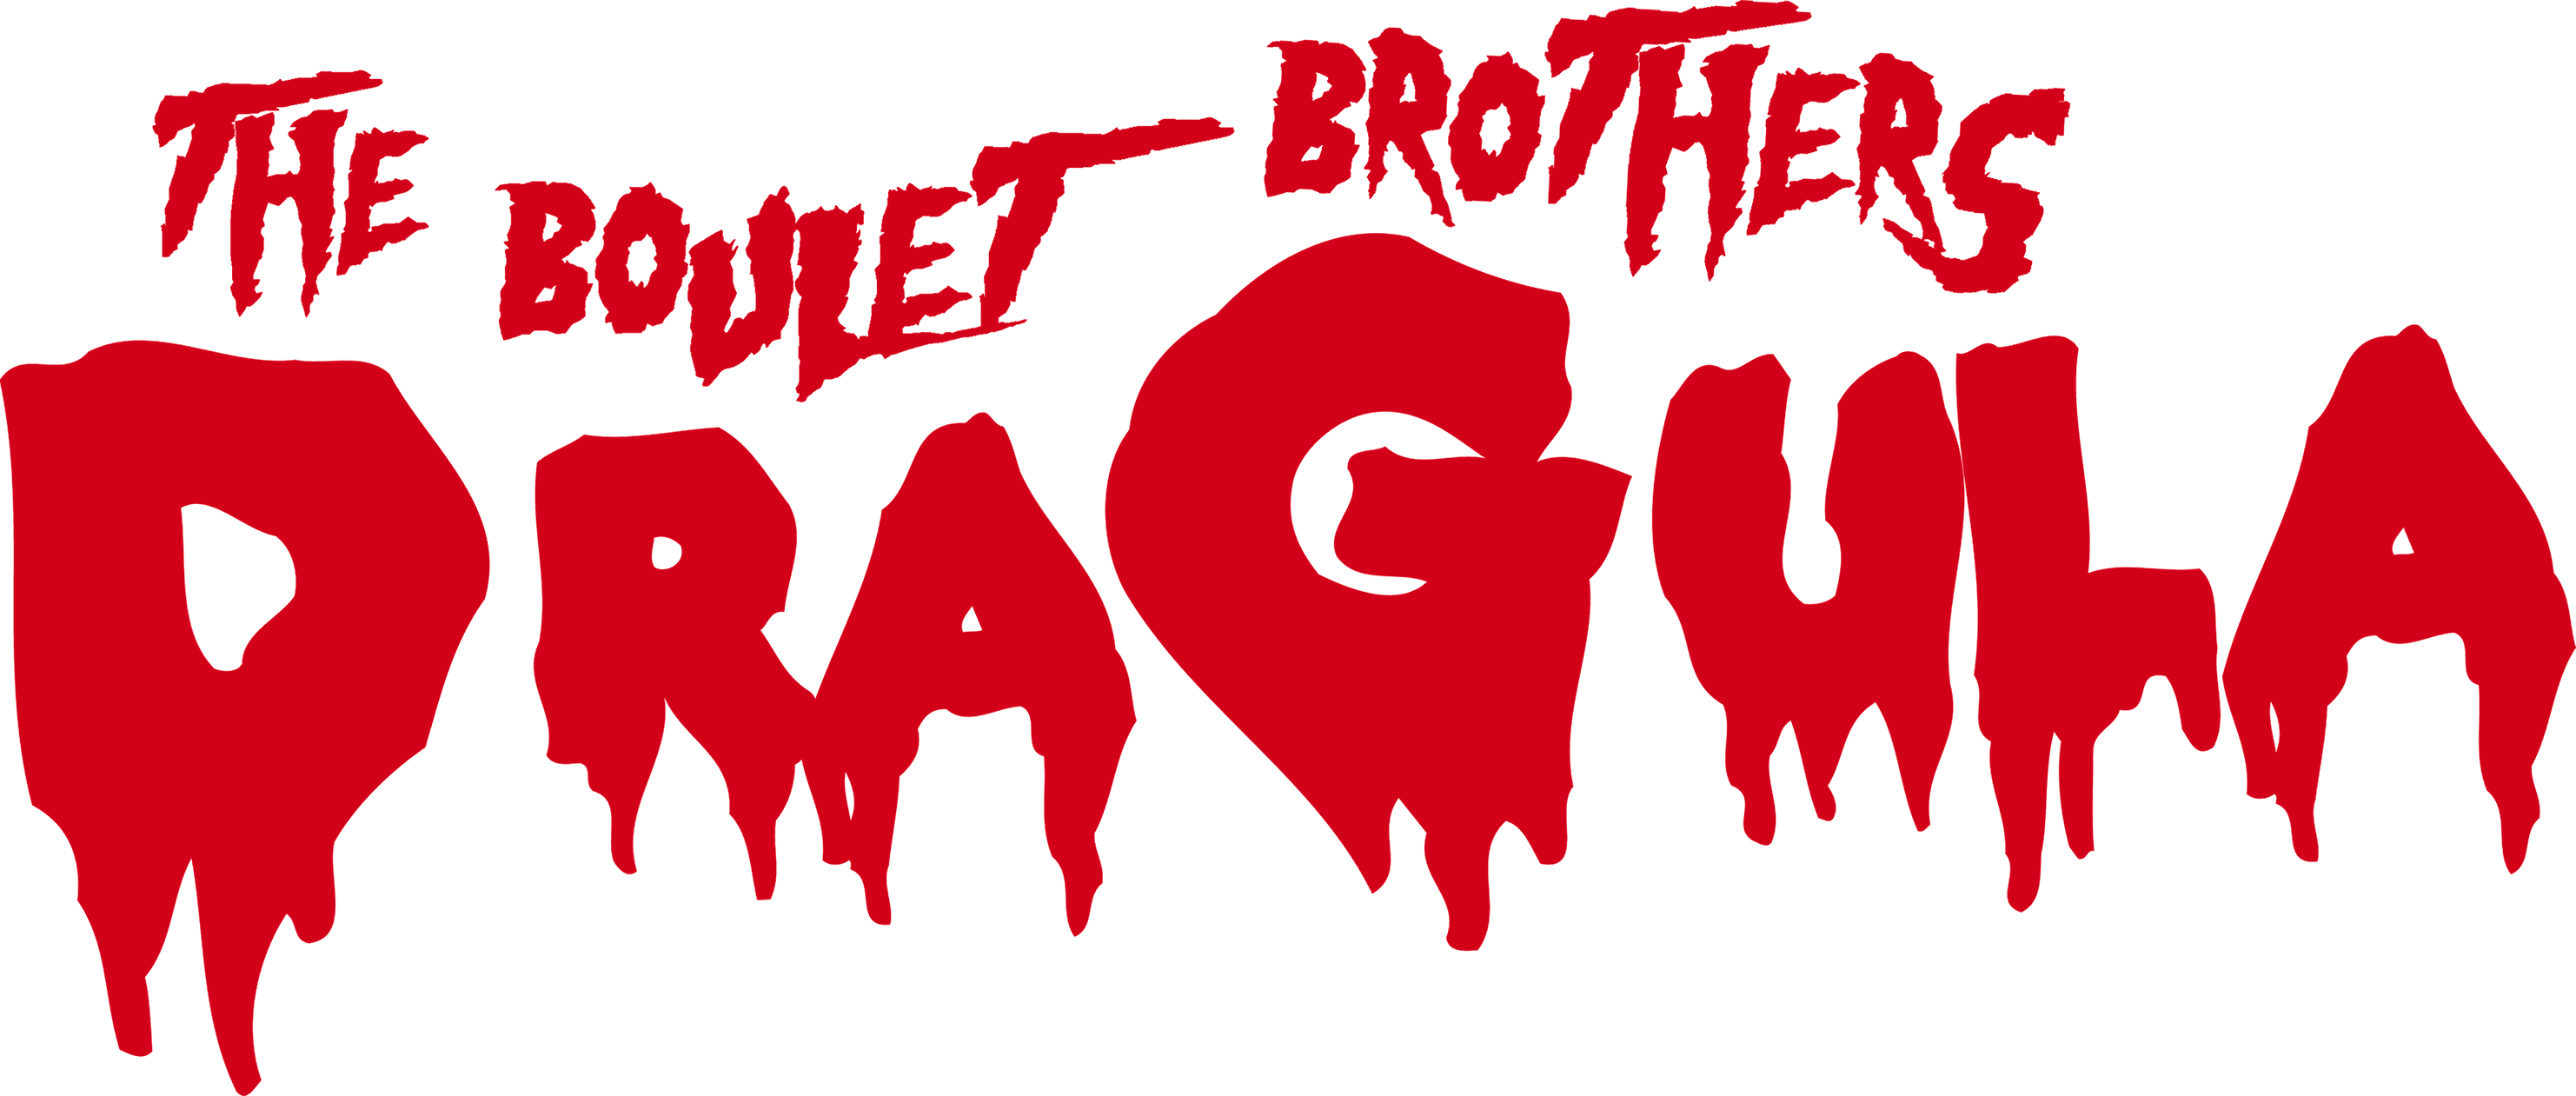 The Boulet Brothers' Dragula logo